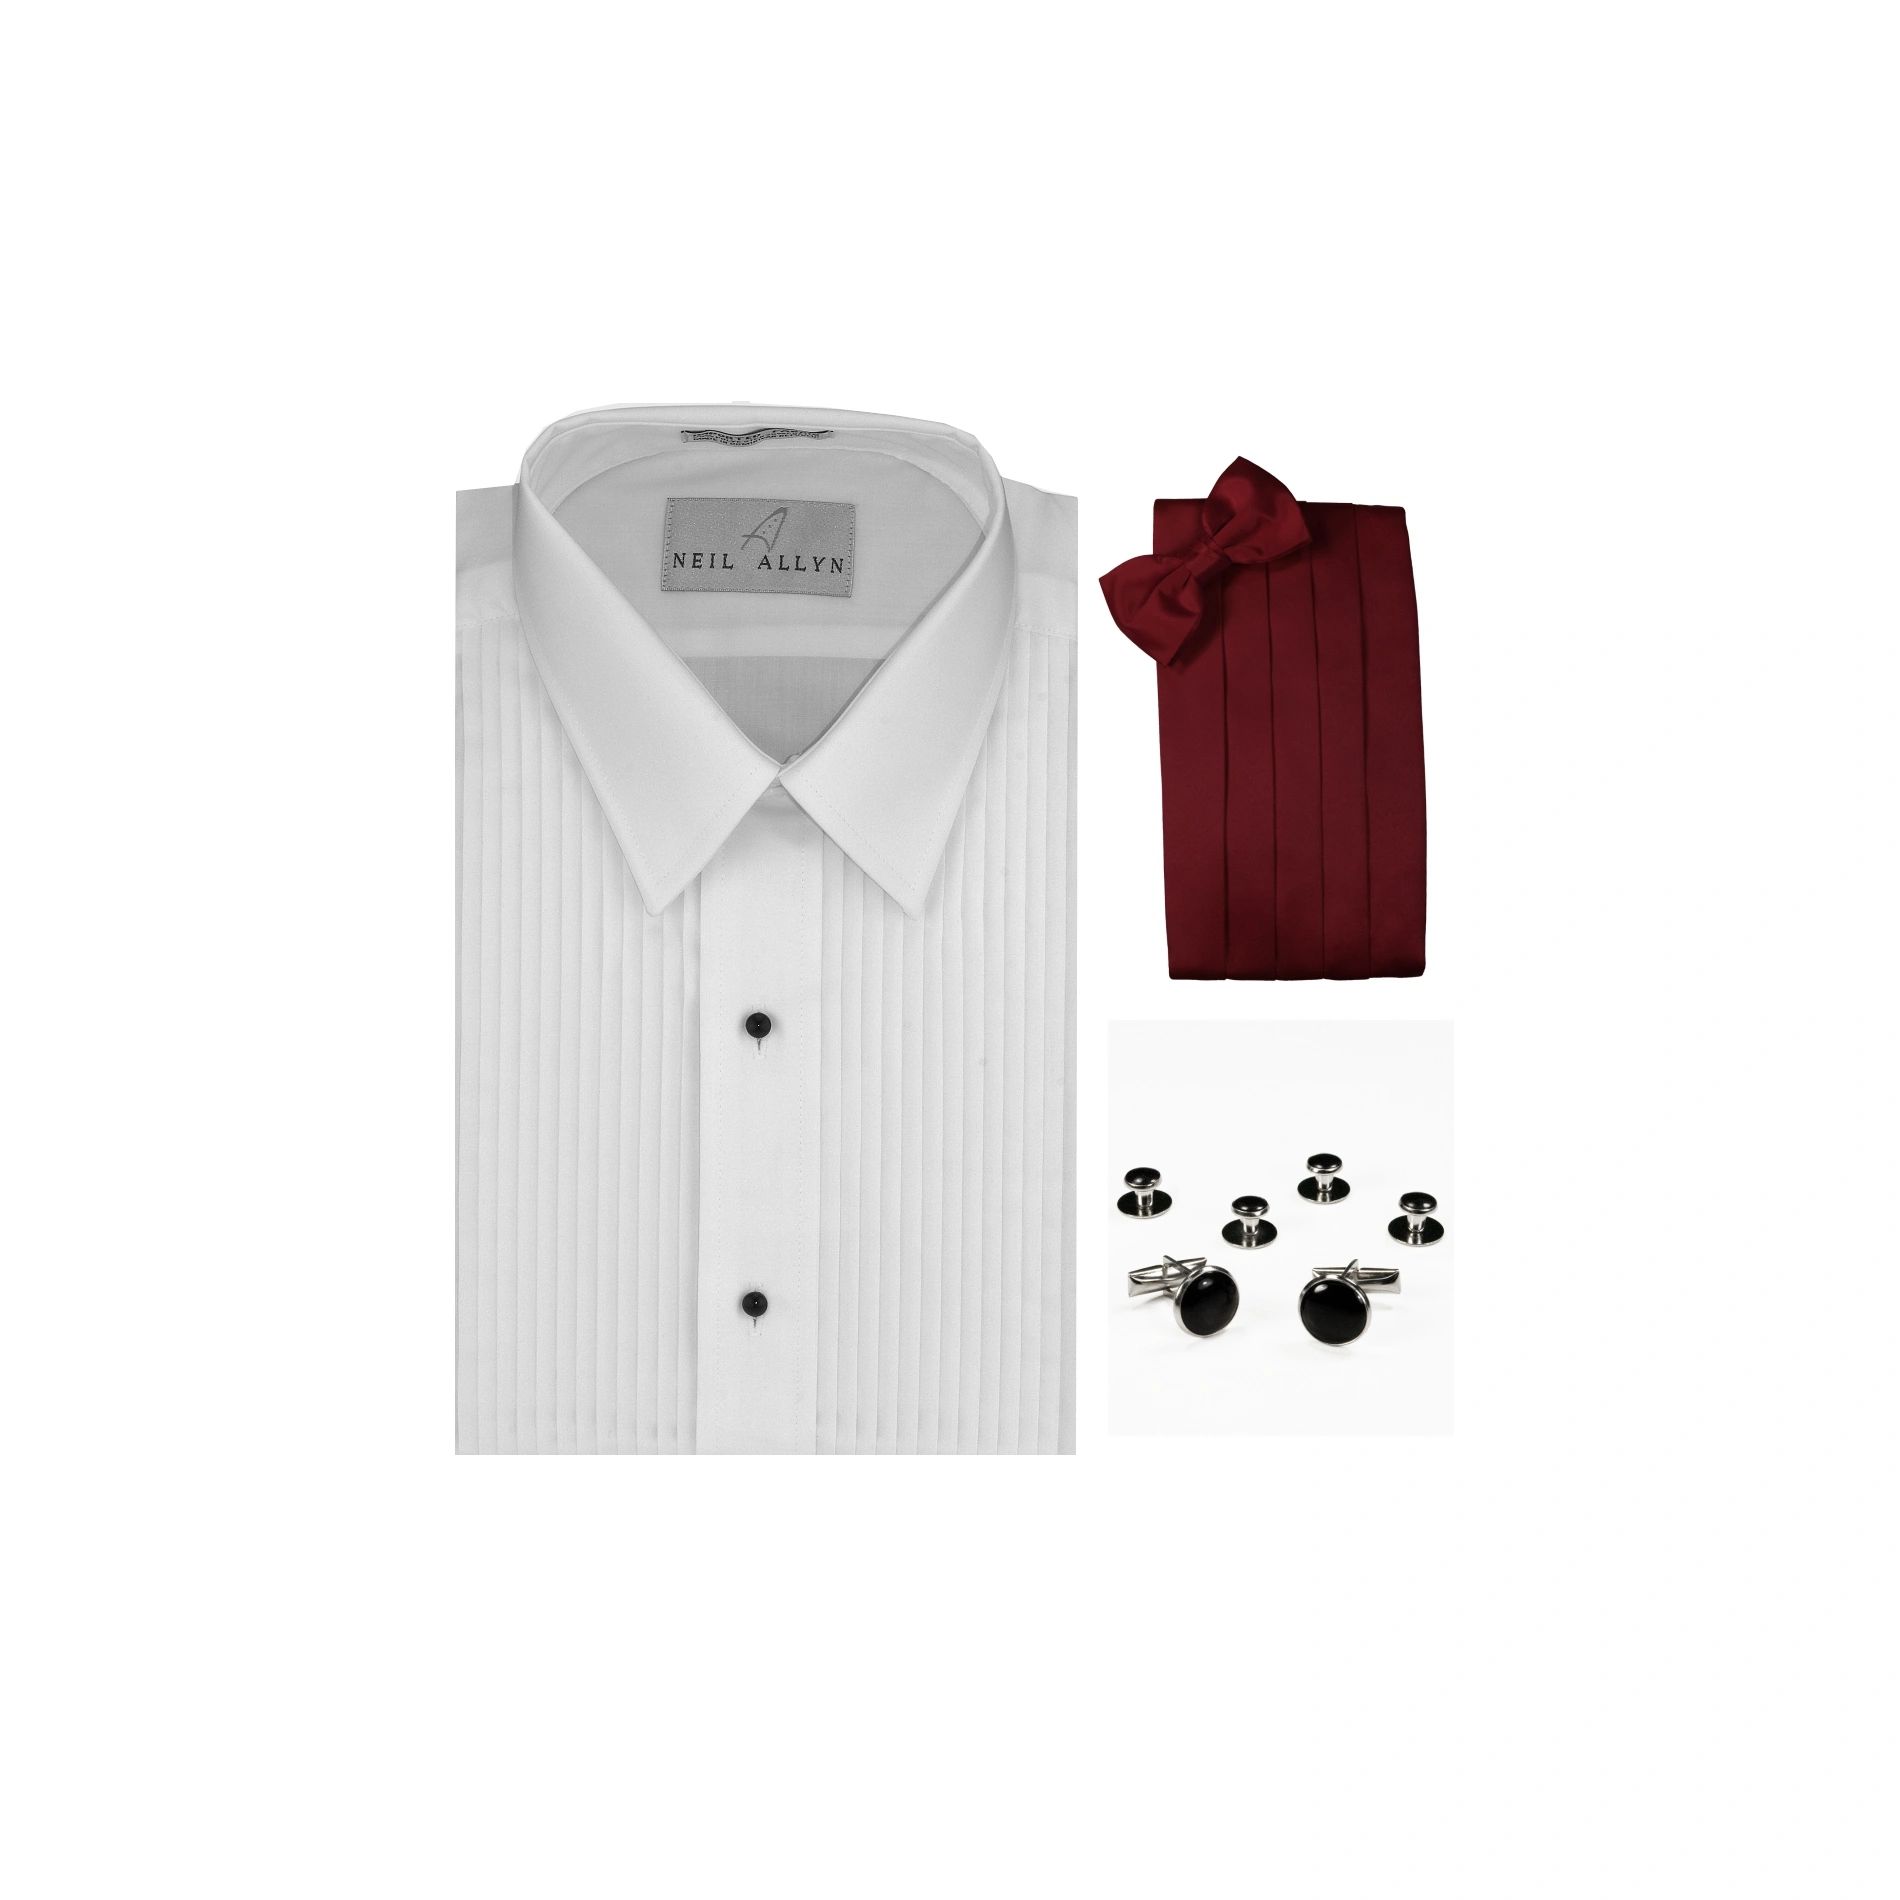 Neil Allyn Lay-Down Collar 1/4" Pleats Formal Tuxedo Shirt, Burgundy Cummerbund, Bow-Tie, Cuff Links & Studs Set